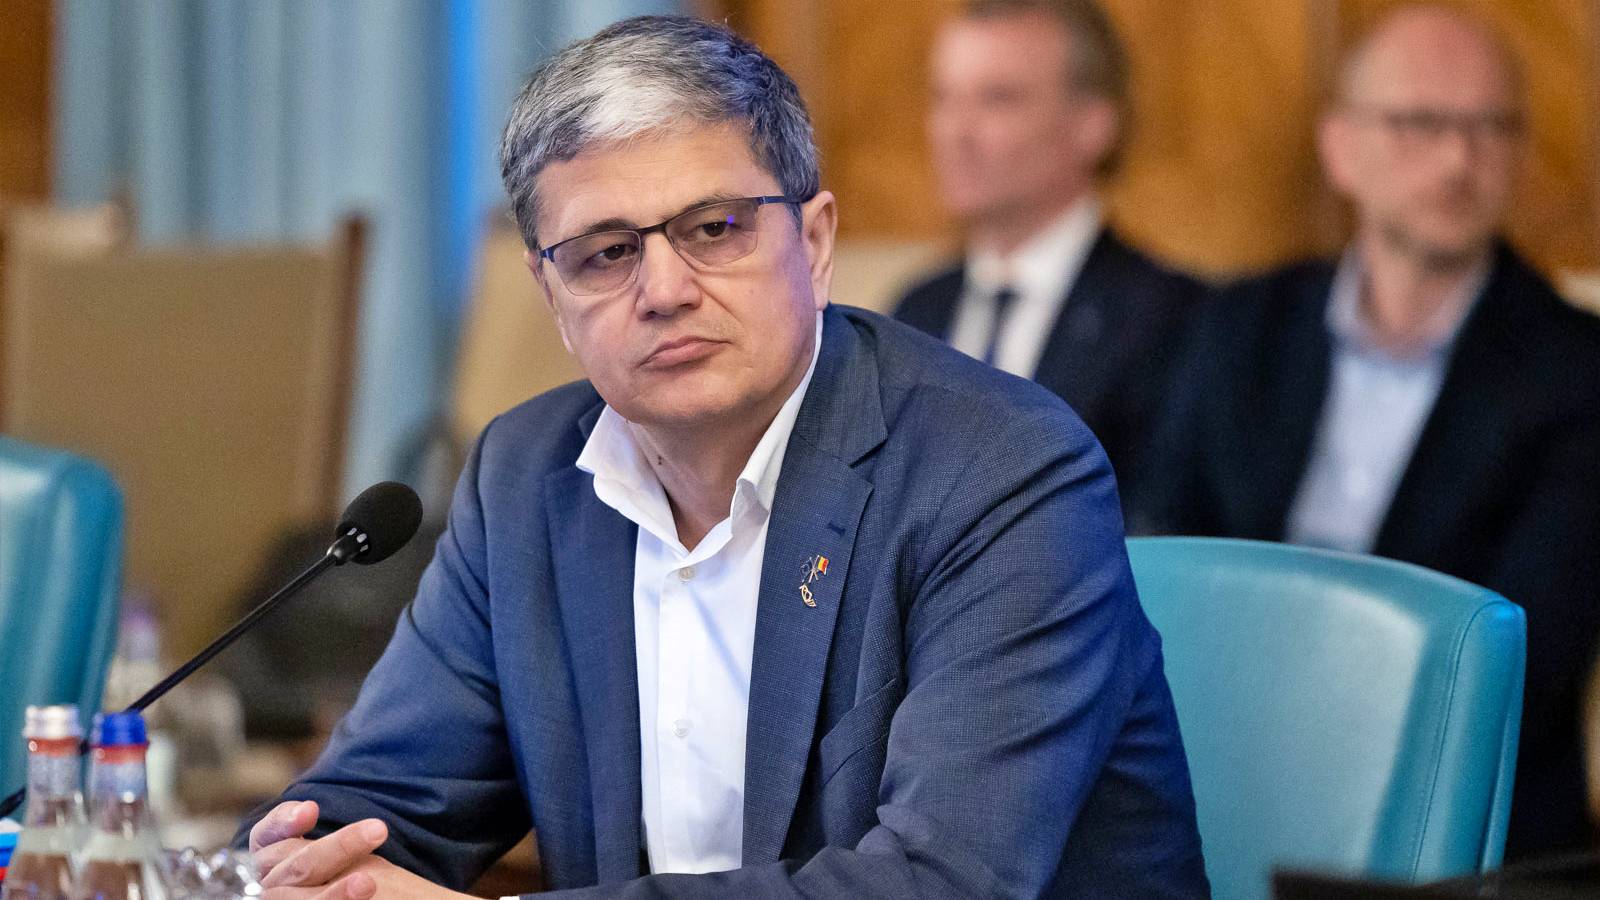 Marcel Bolos Confirma 2 Seturi Masuri ULTIMA ORA Investitii Mari Romania